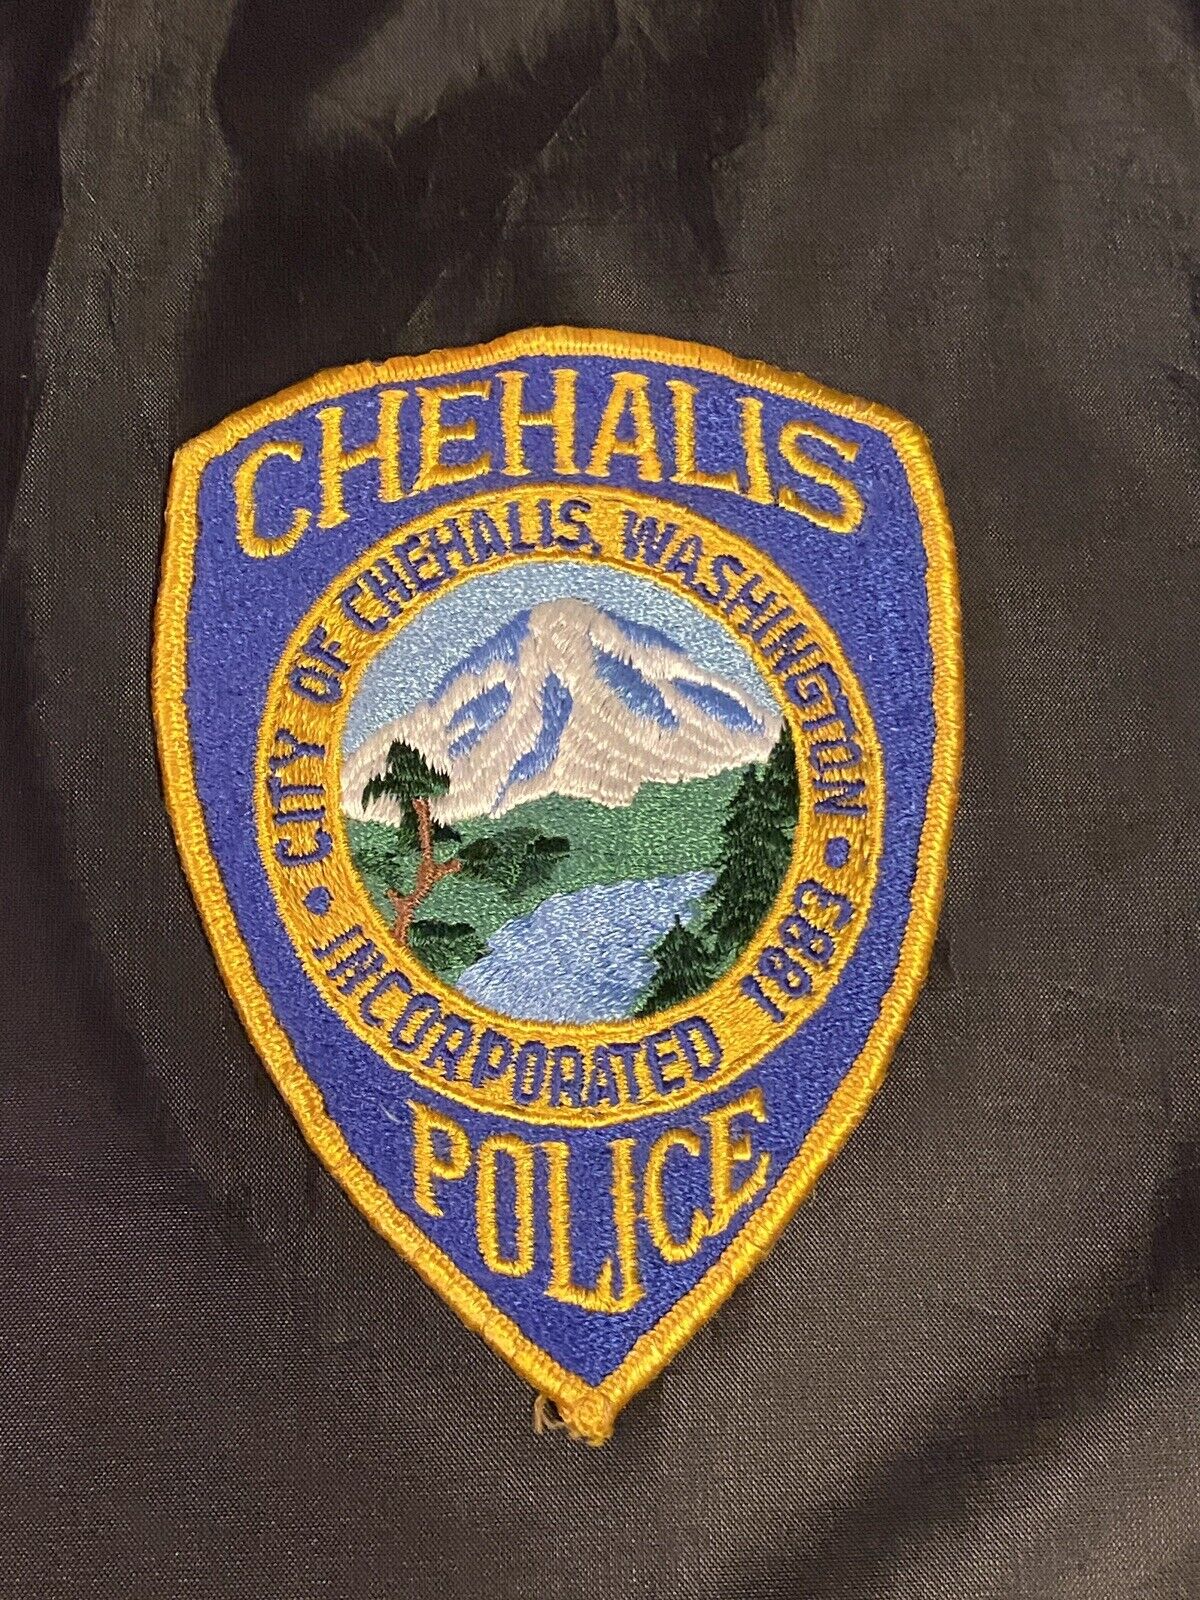 Original Vintage City Of Chehalis Washington Police Patch Incorporated 1883